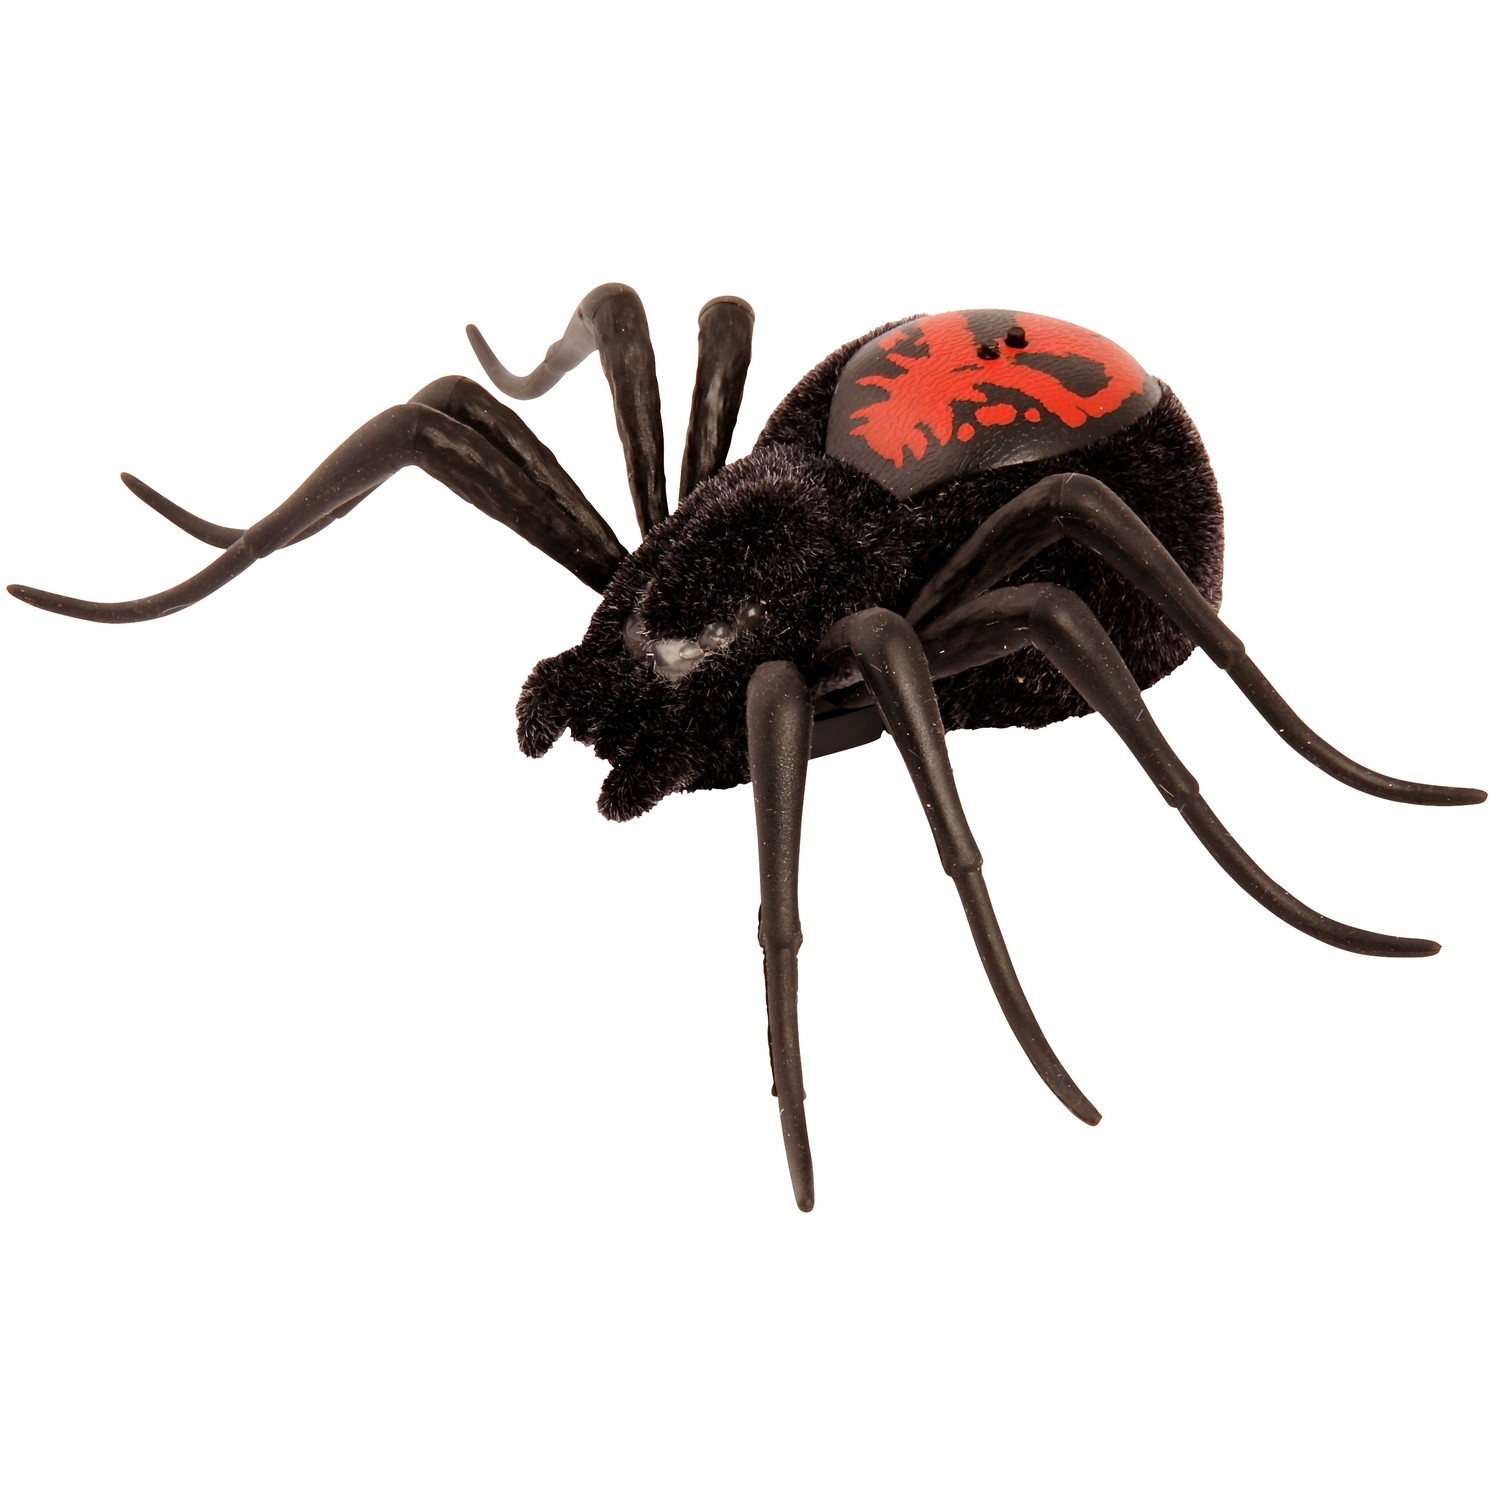 Good wild pets. Паук игрушка. Интерактивная игрушка "паук". Игрушка дикий паук. Игрушечный черный паук.